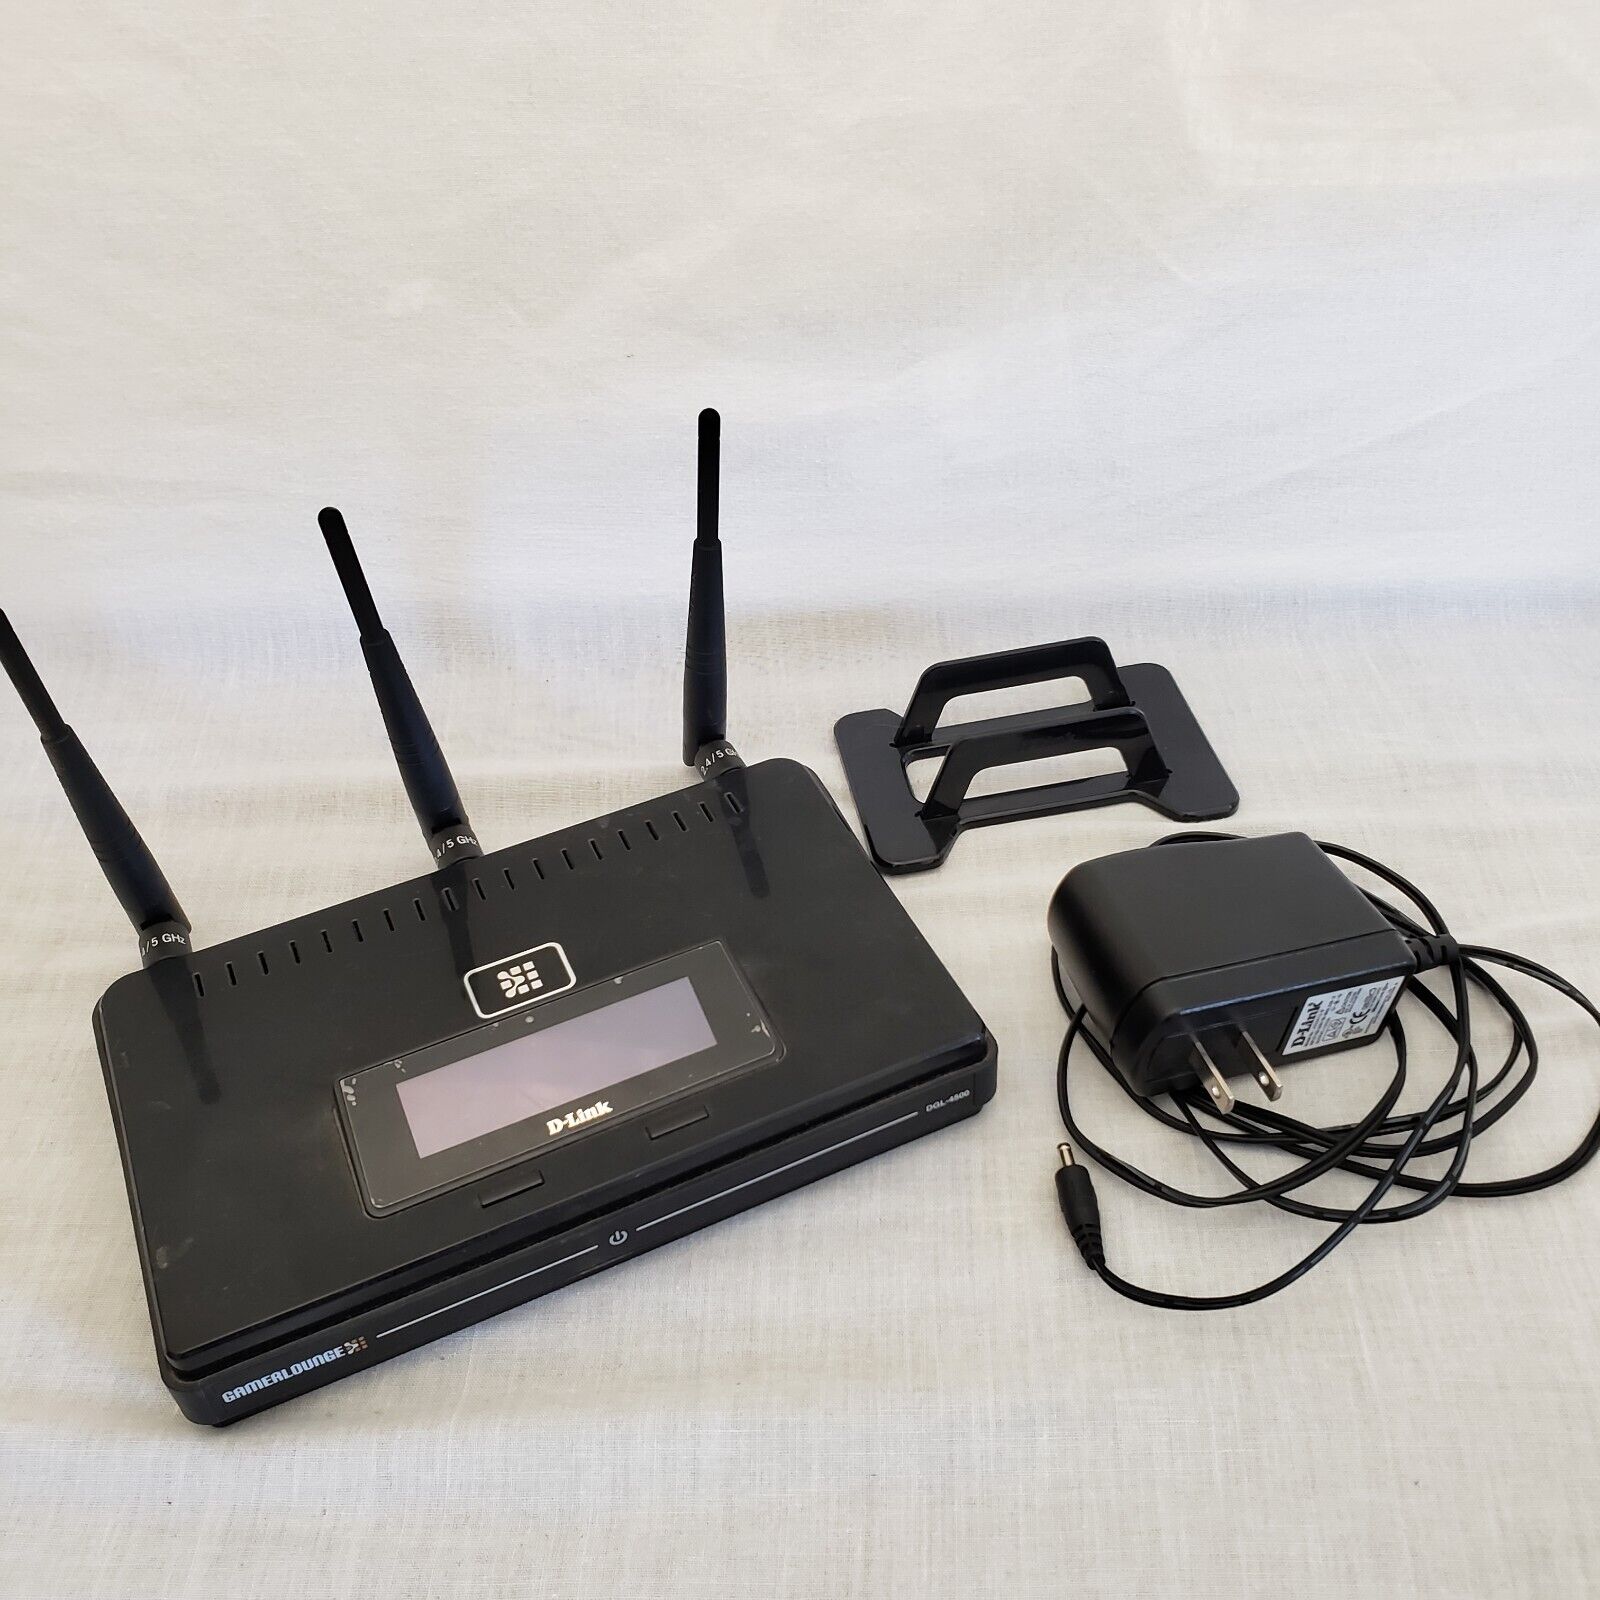 D-Link DGL-4500 (54 Mbps 4-Port 10/100 Wireless N Router)